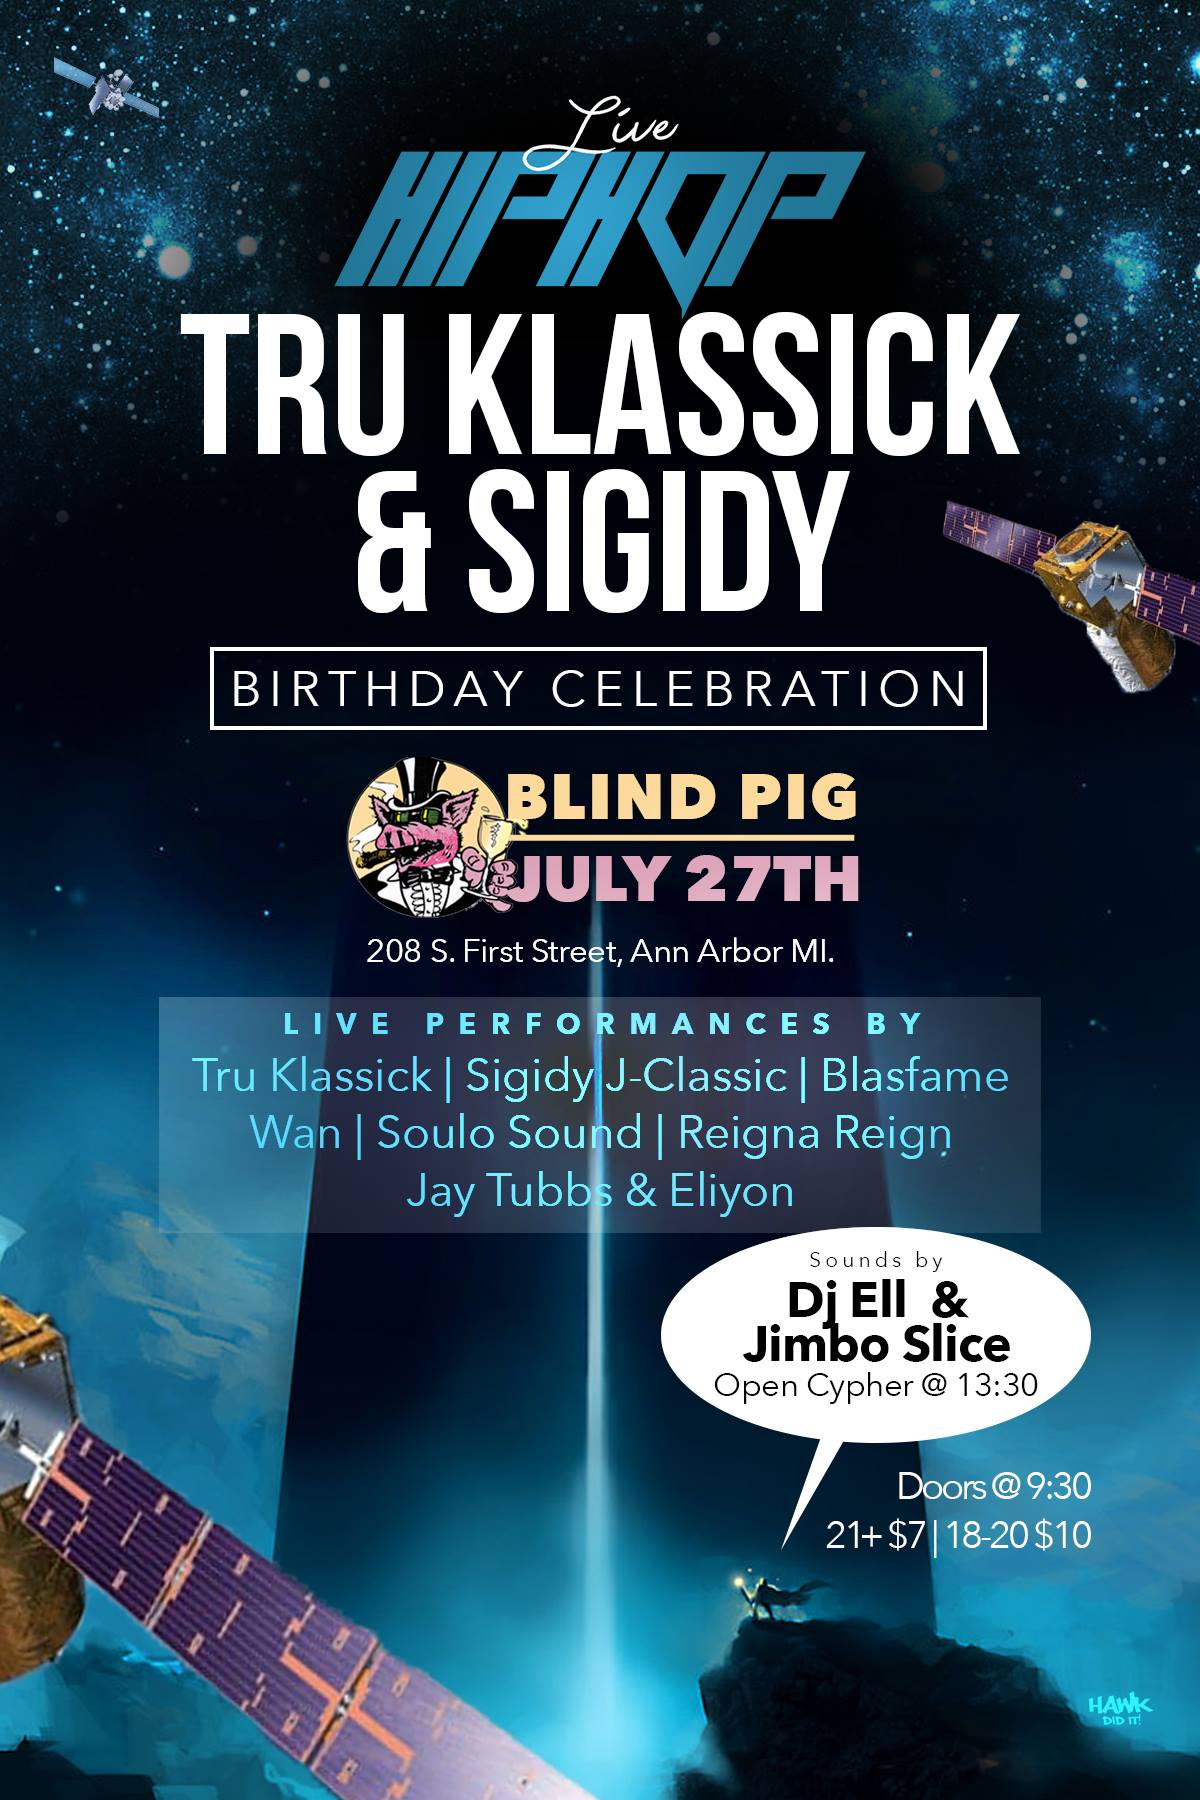 Tru Klassick Sigidy Birthday Show Blind Pig with DJ Ell